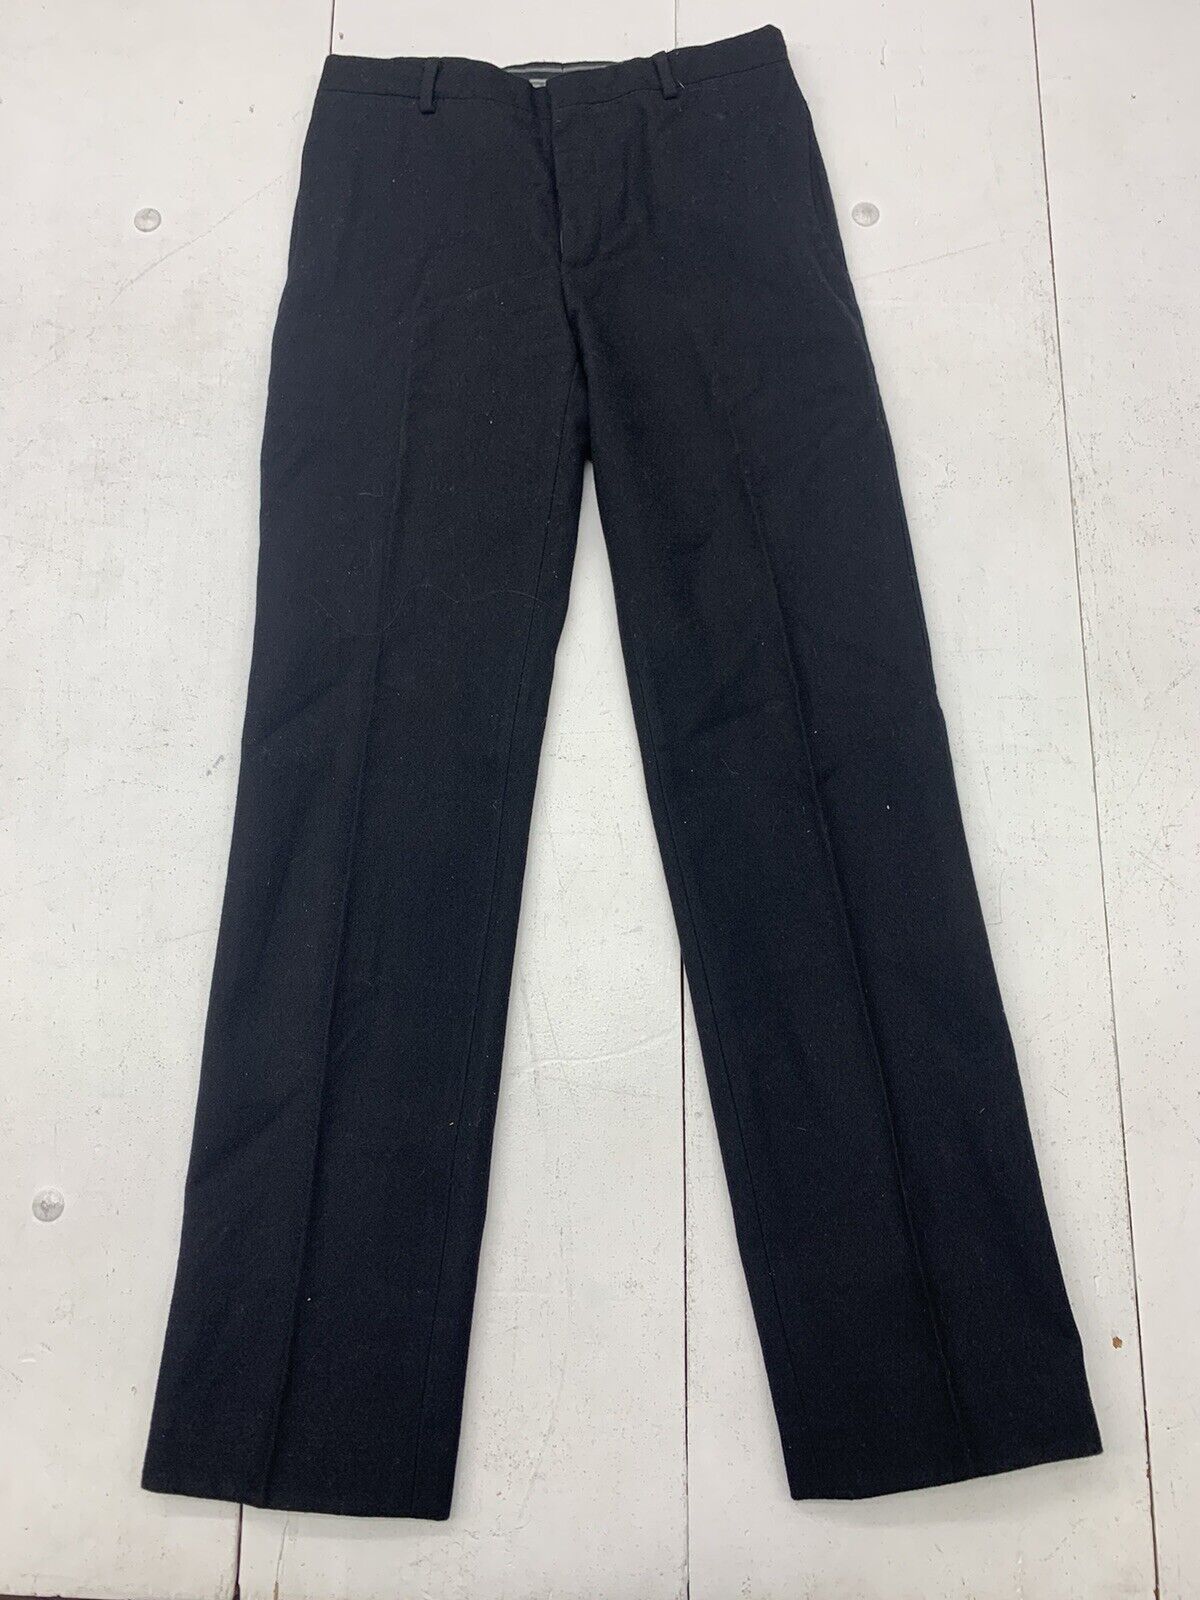 Match Men's Cargo Pants 6XL Size 44 Black 3357 Inseam: 31 1/2 Inches | eBay